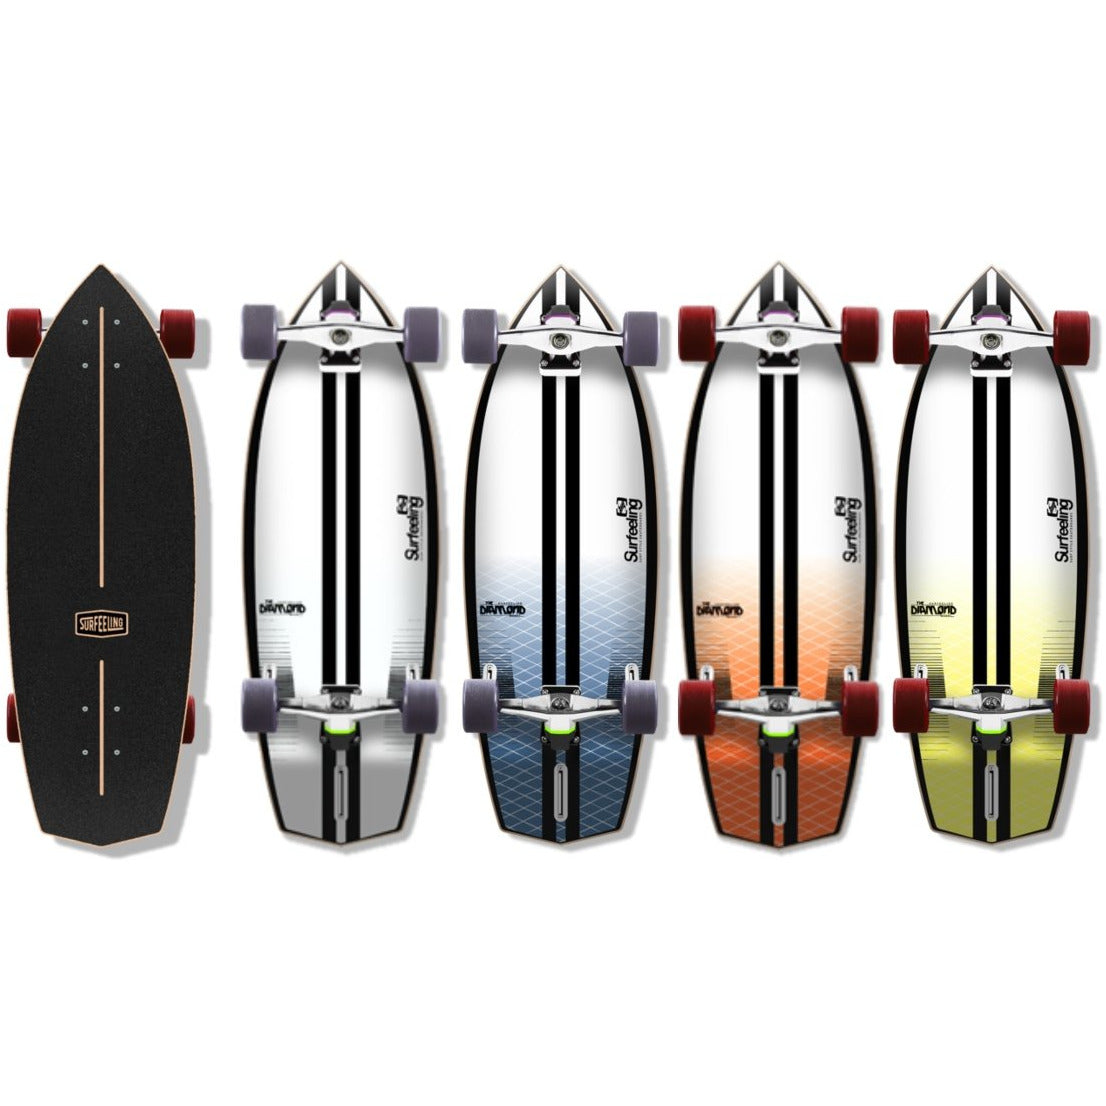 Surfeeling USA Blowfish Surfboard Series Skateboard